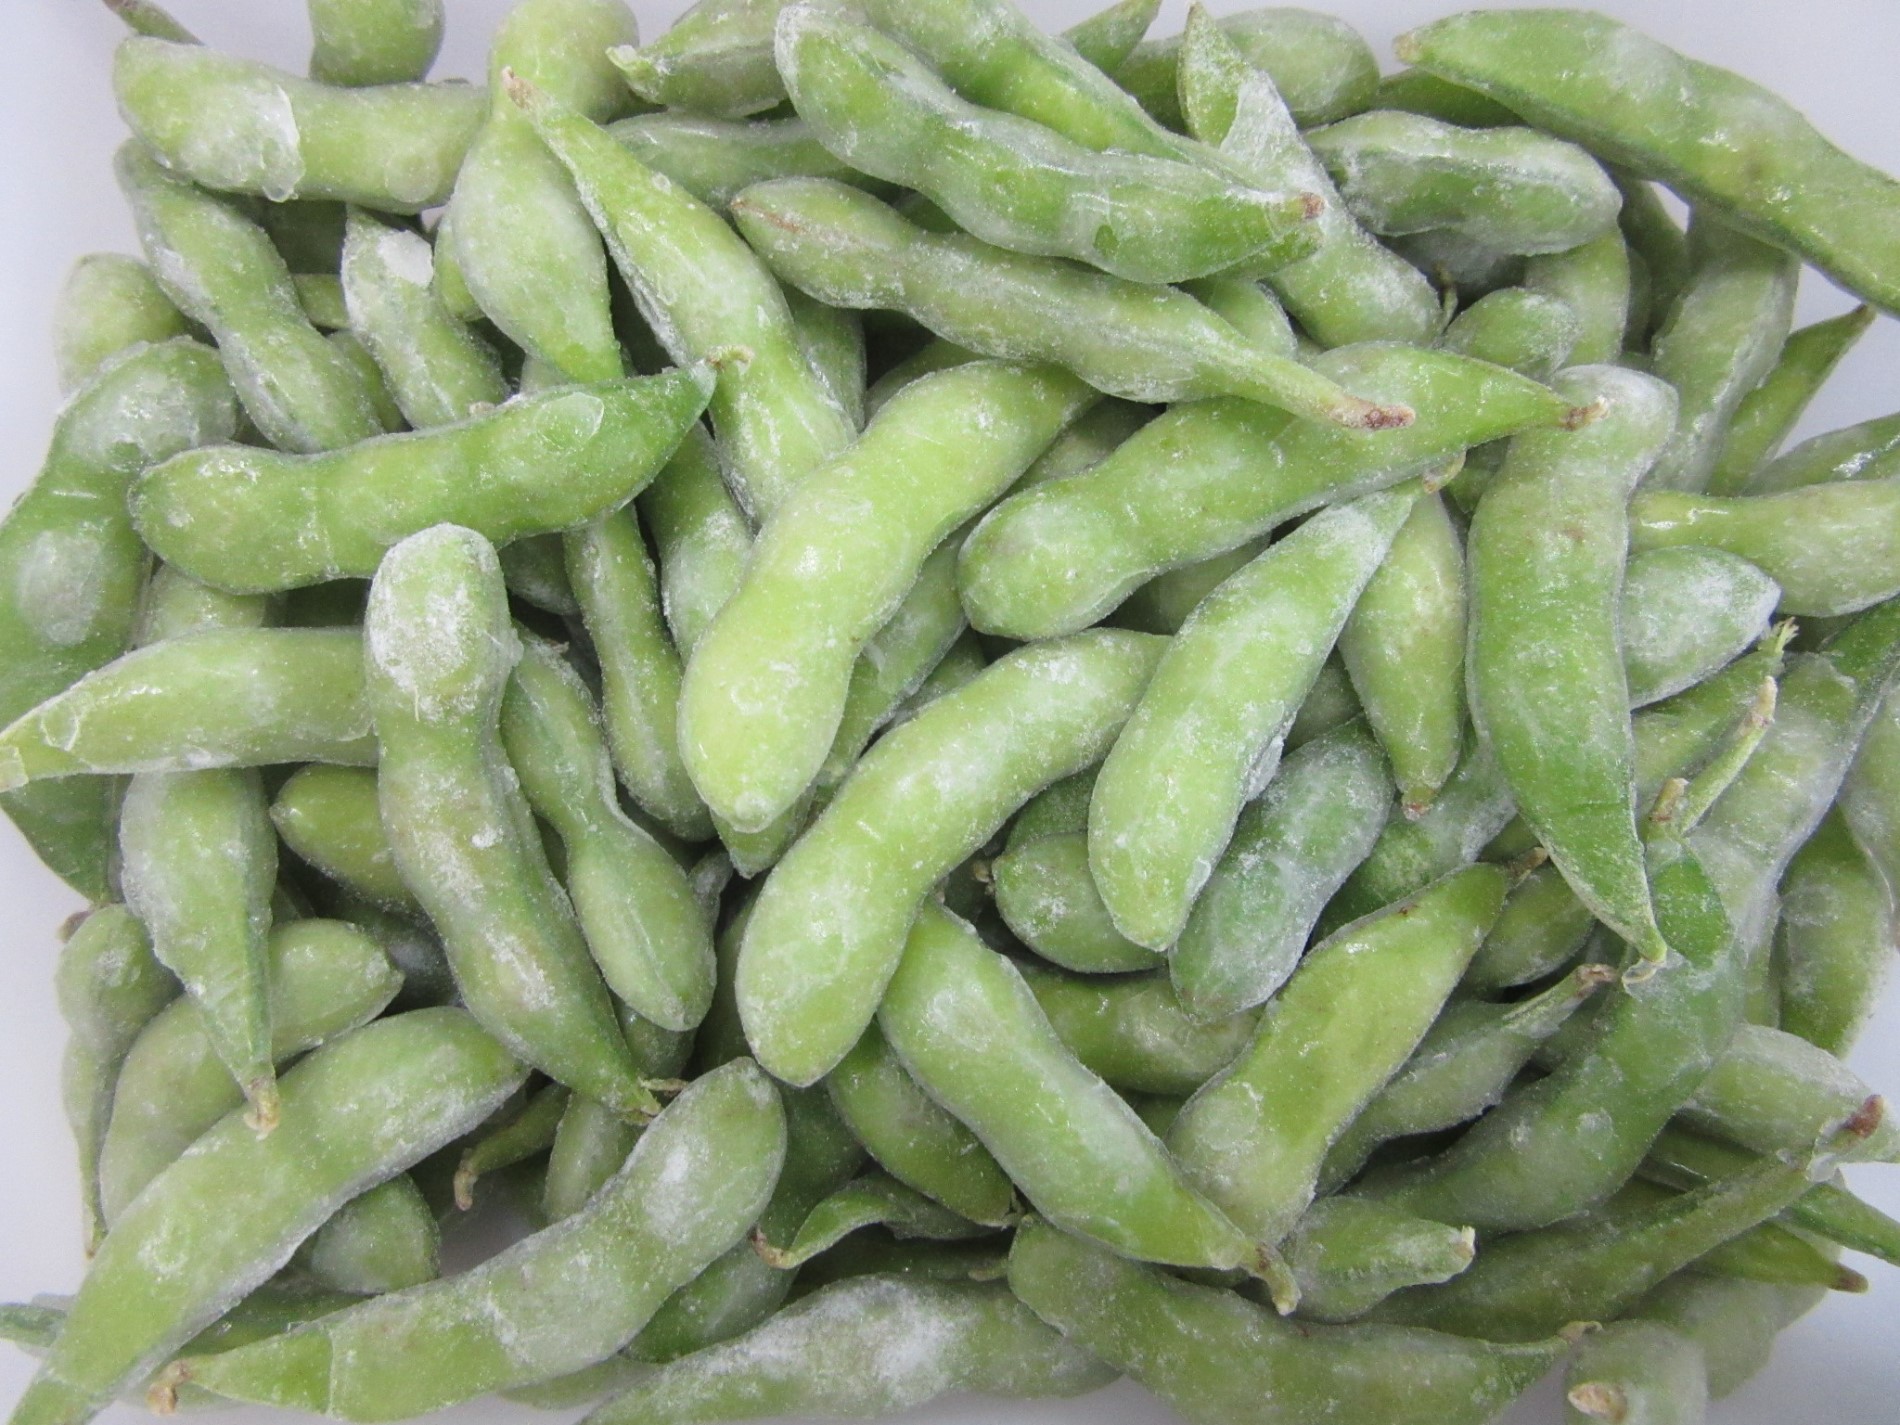 IQF Frozen Organic Edamame Beans Manufacturers, IQF Frozen Organic Edamame Beans Factory, Supply IQF Frozen Organic Edamame Beans